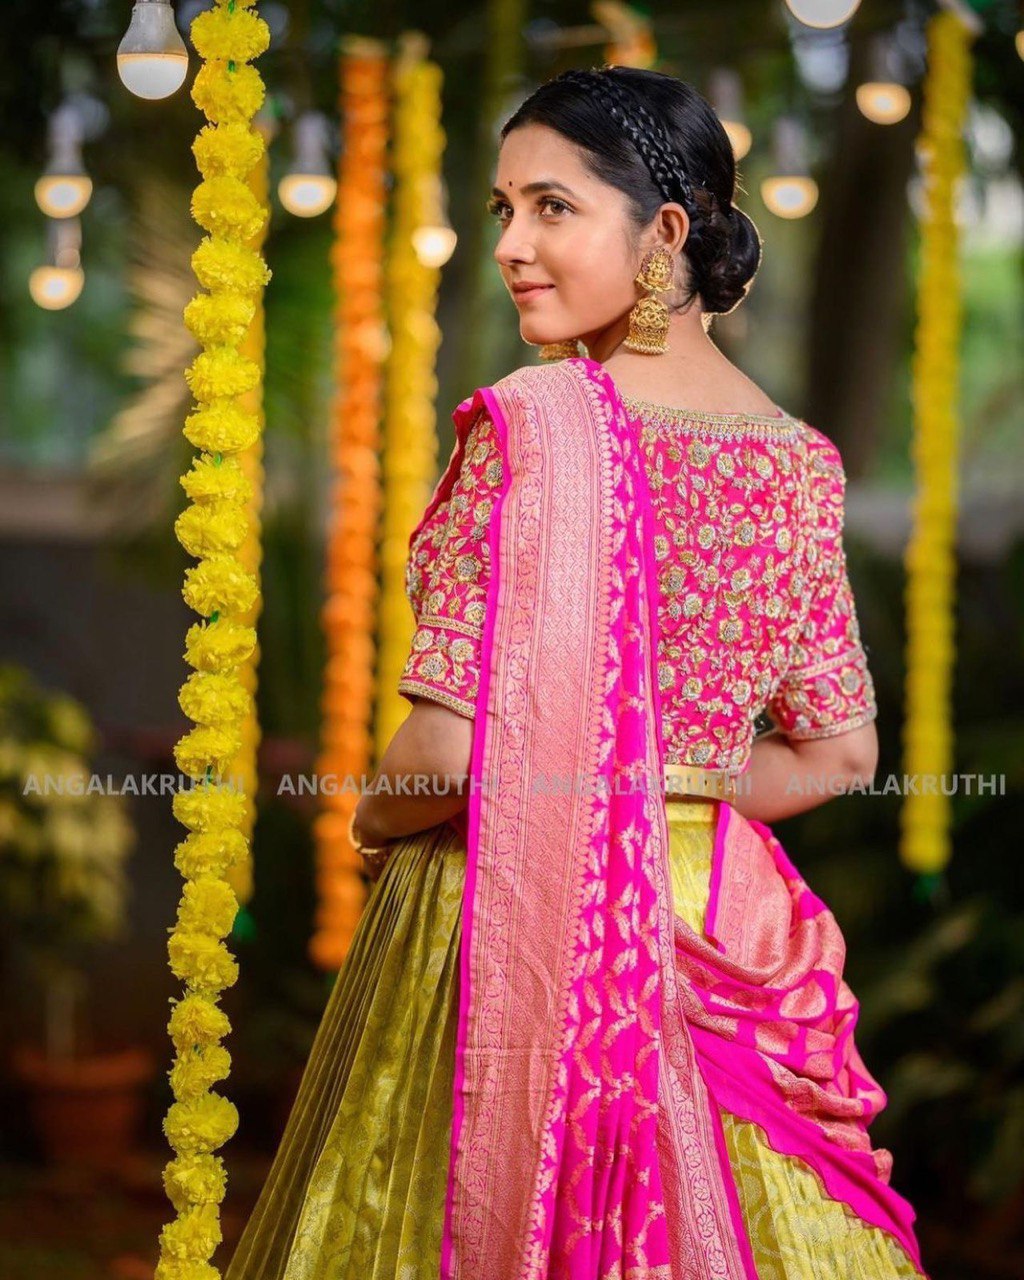 Vootbuy Yellow & Pink Zari Embroidered Lehenga Choli for Wedding